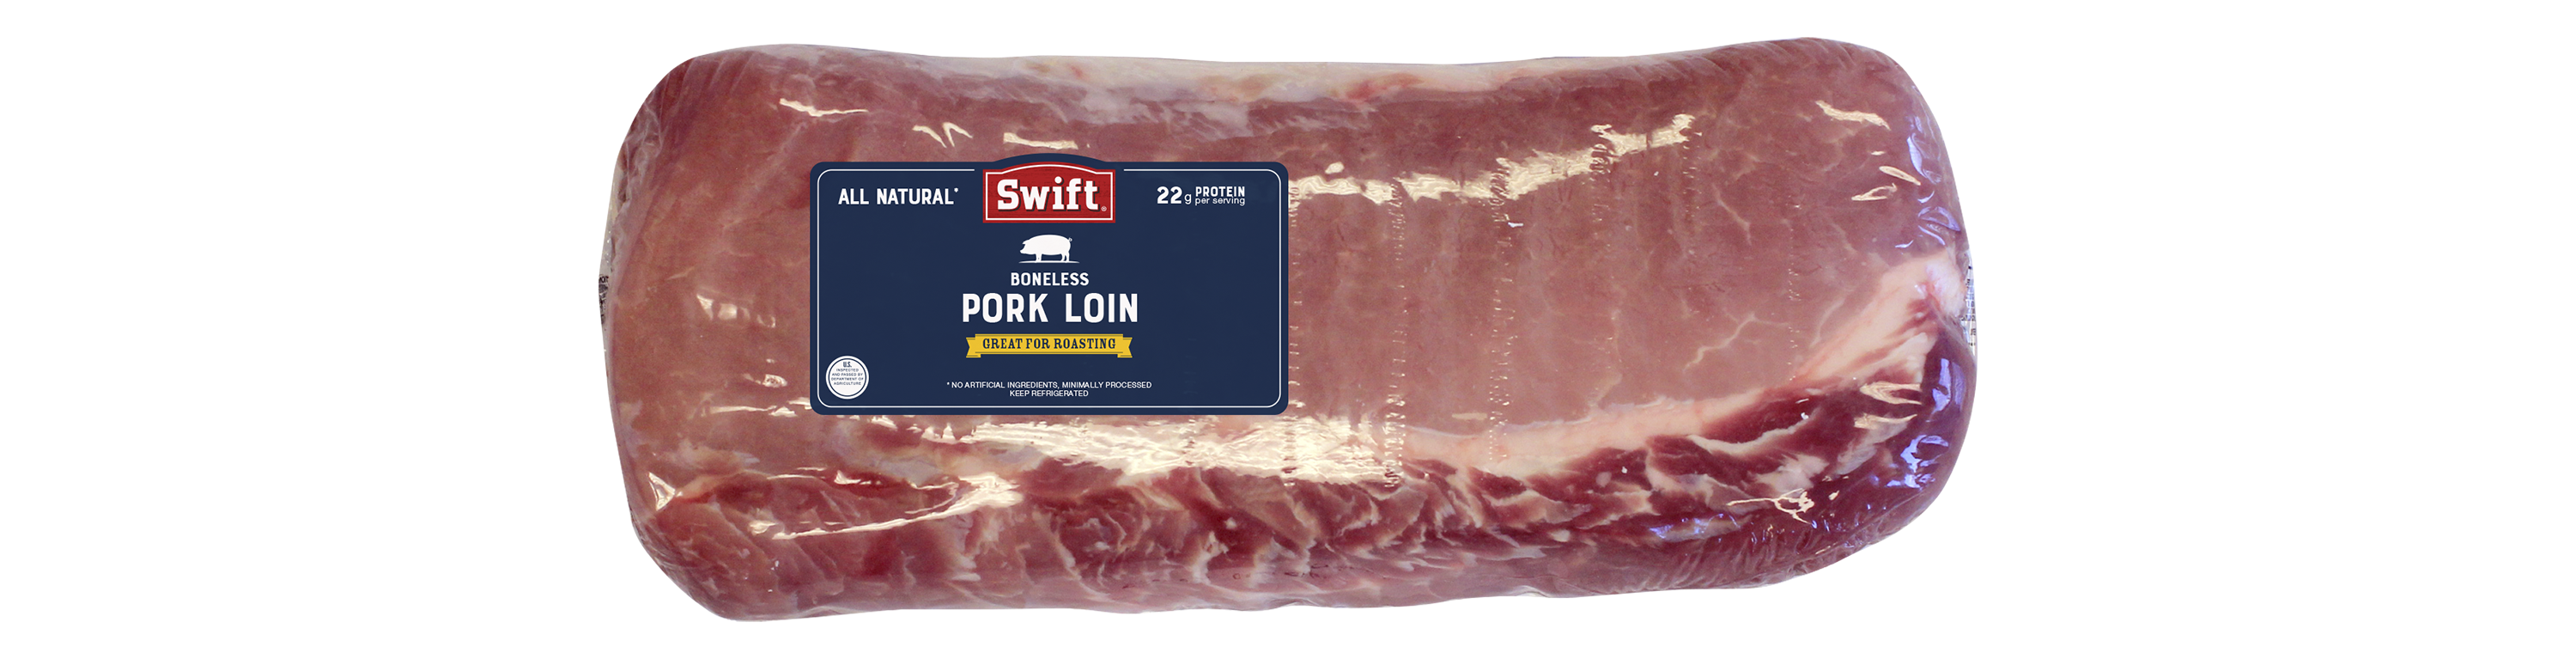 Pork Loin